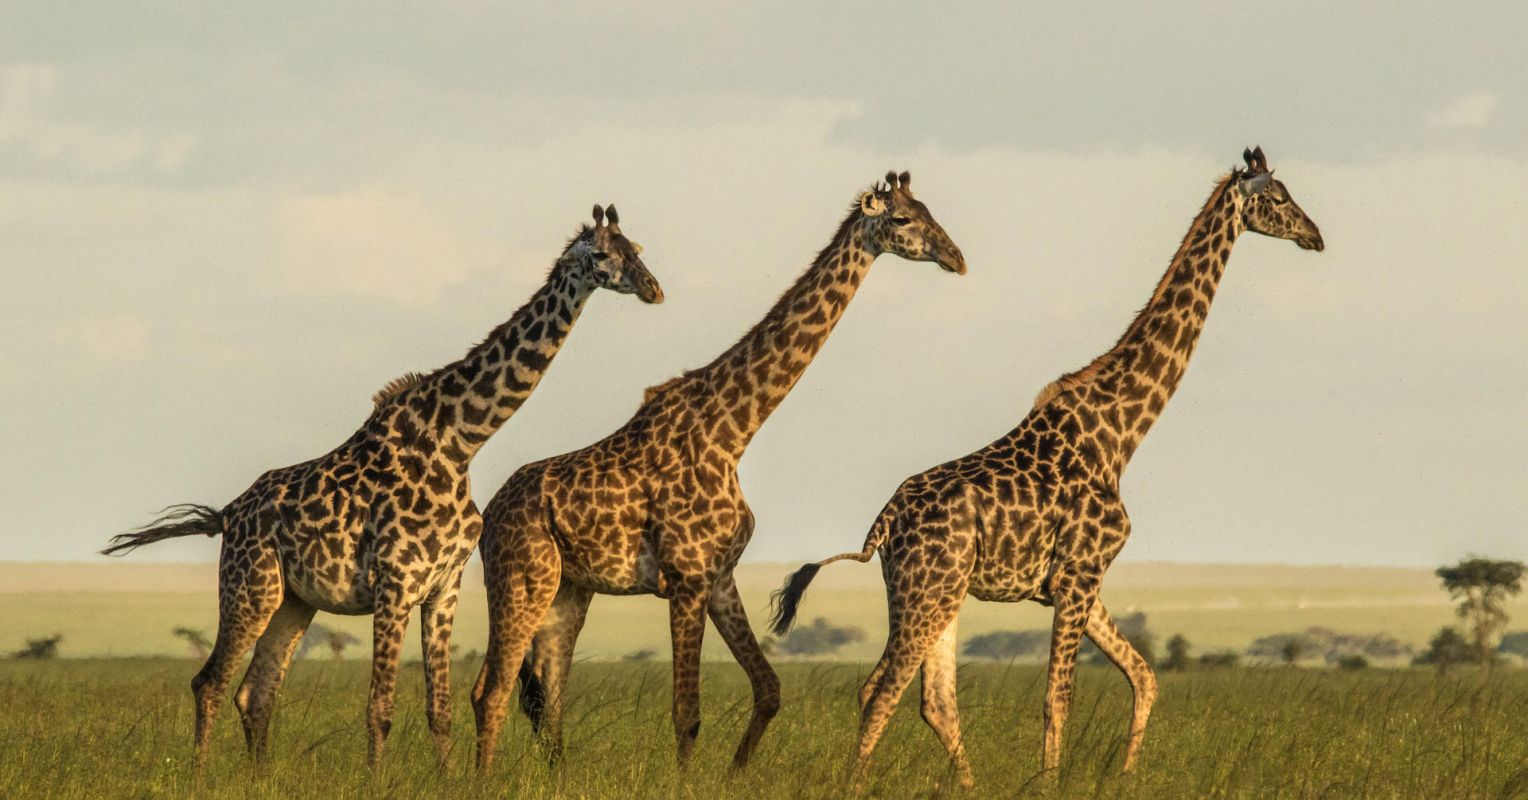 Spot Shape Is Meaningful in Giraffe Social Circles